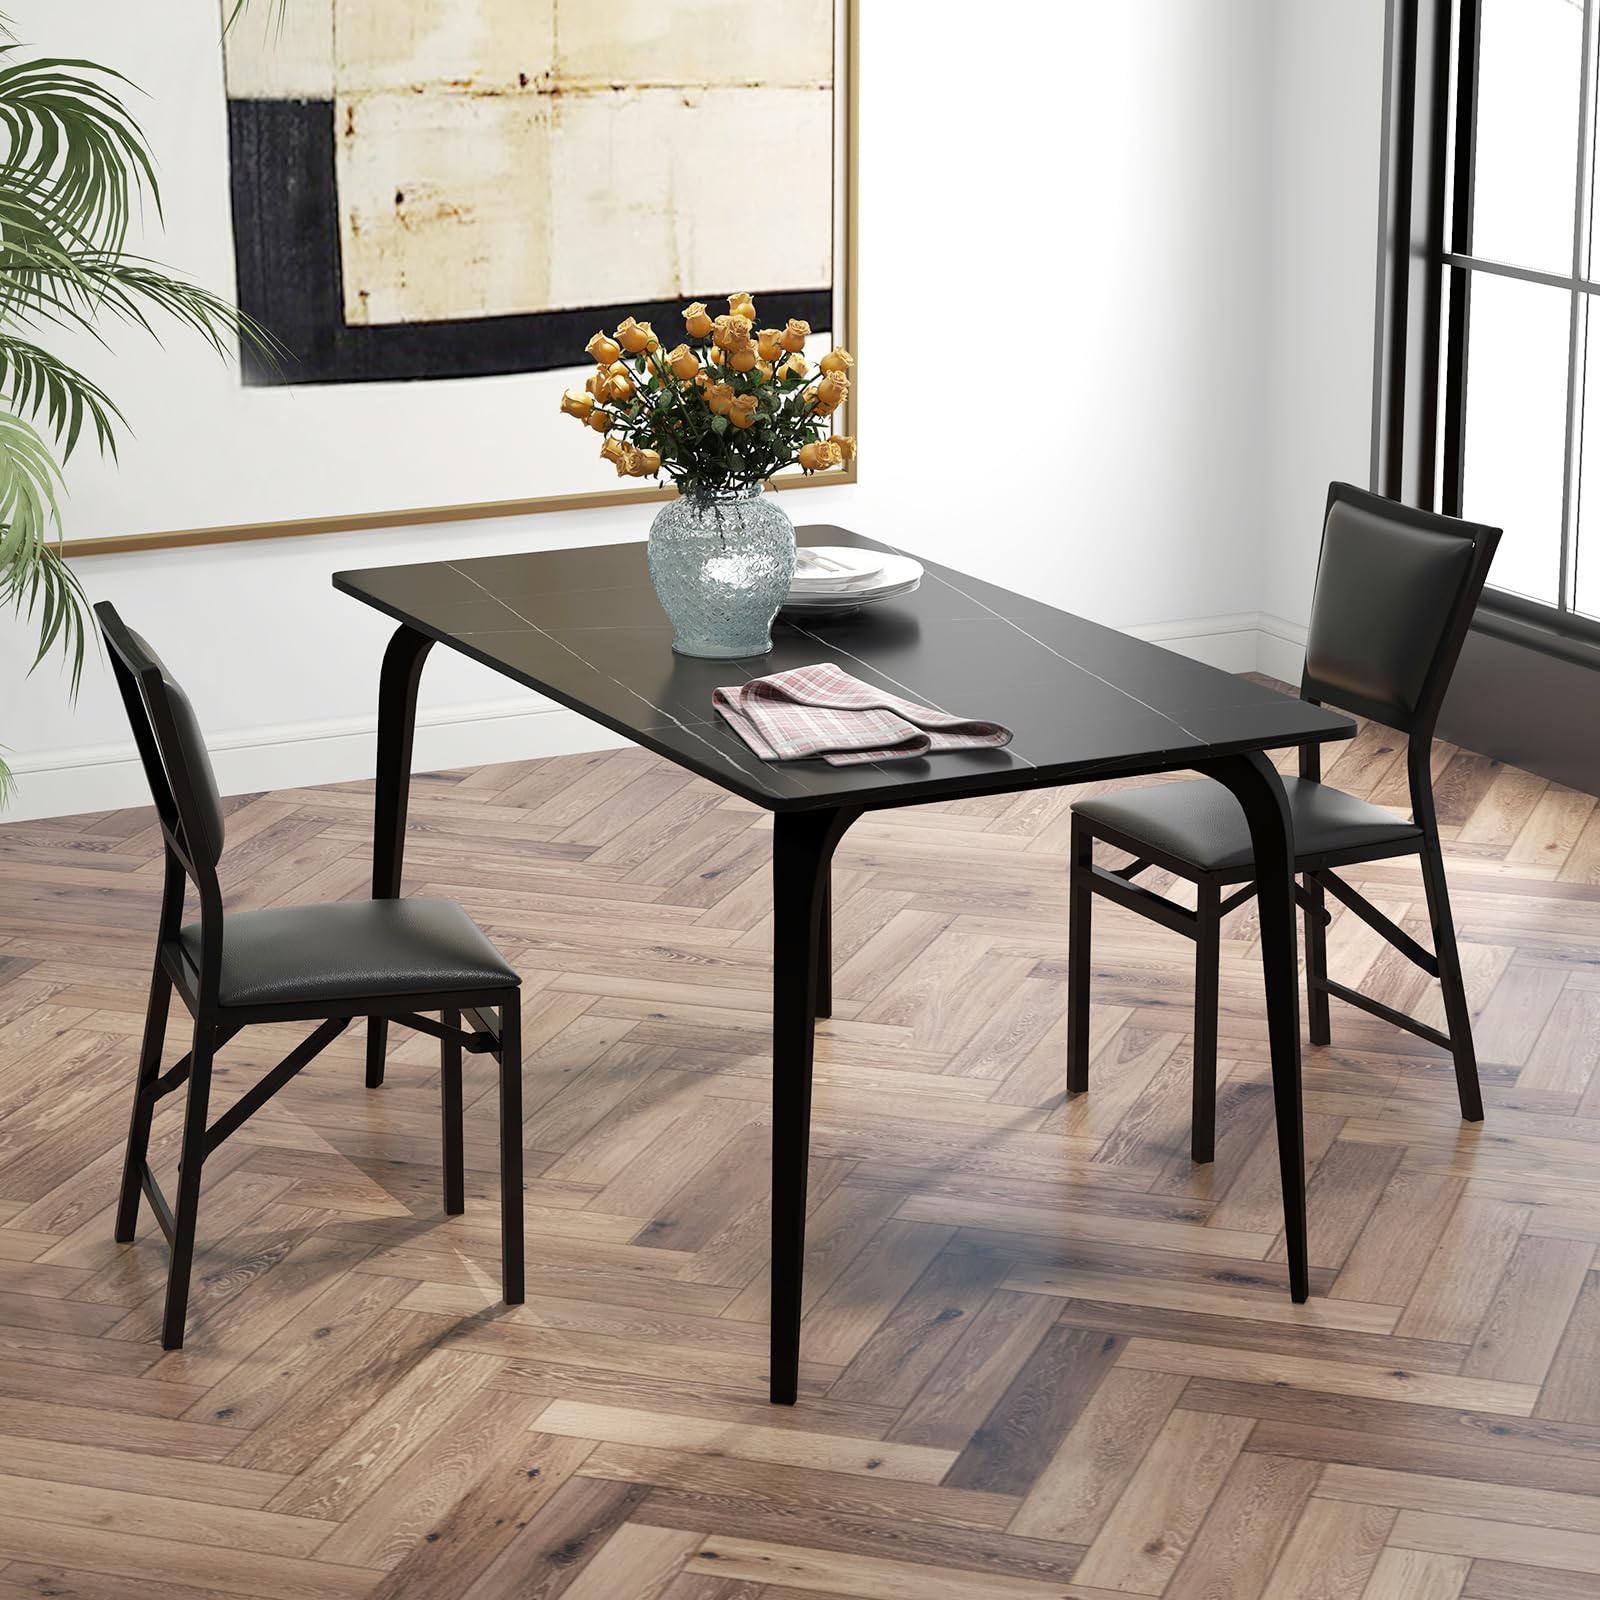 Metal Folding Chair Dining Chairs Home Restaurant Furniture - Giantex